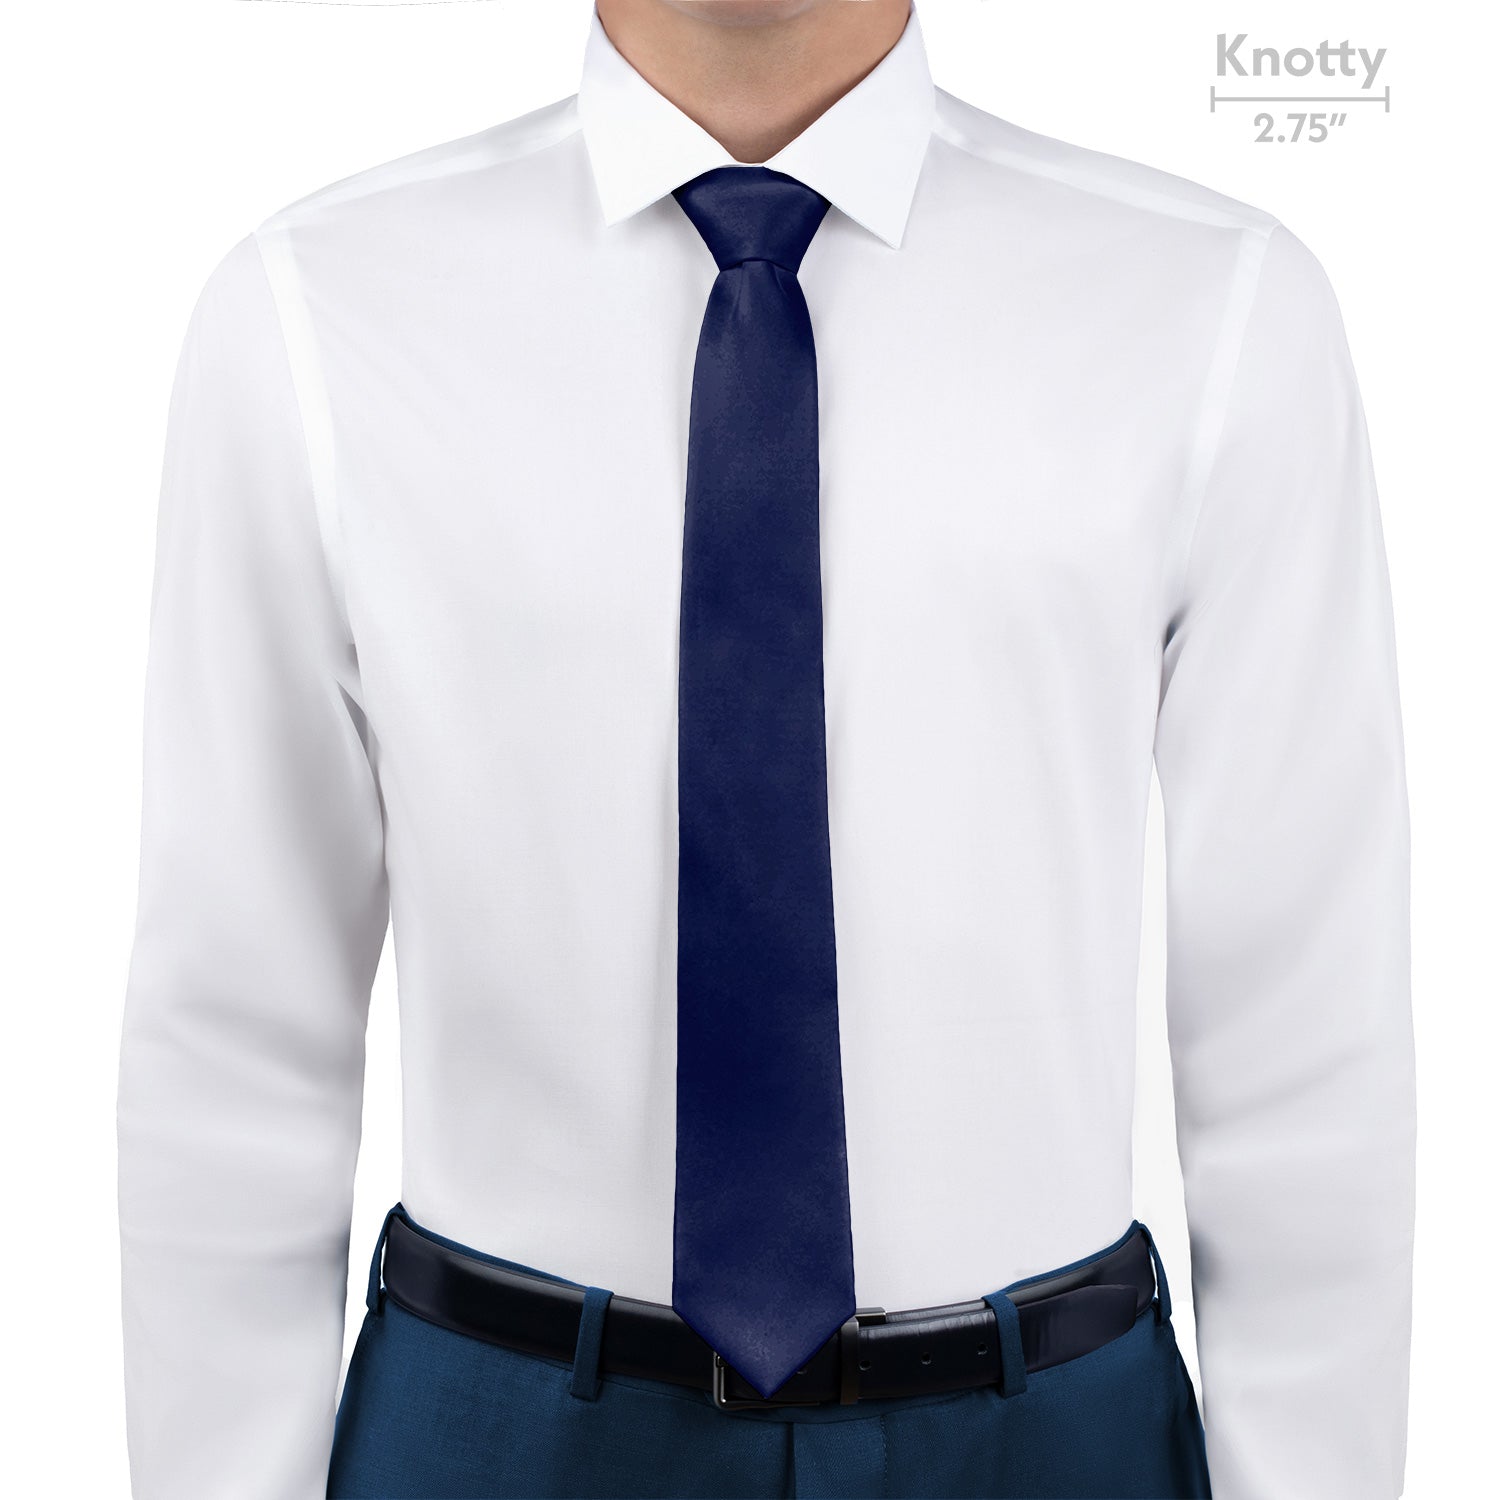 Solid KT Navy Necktie - Knotty - Knotty Tie Co.